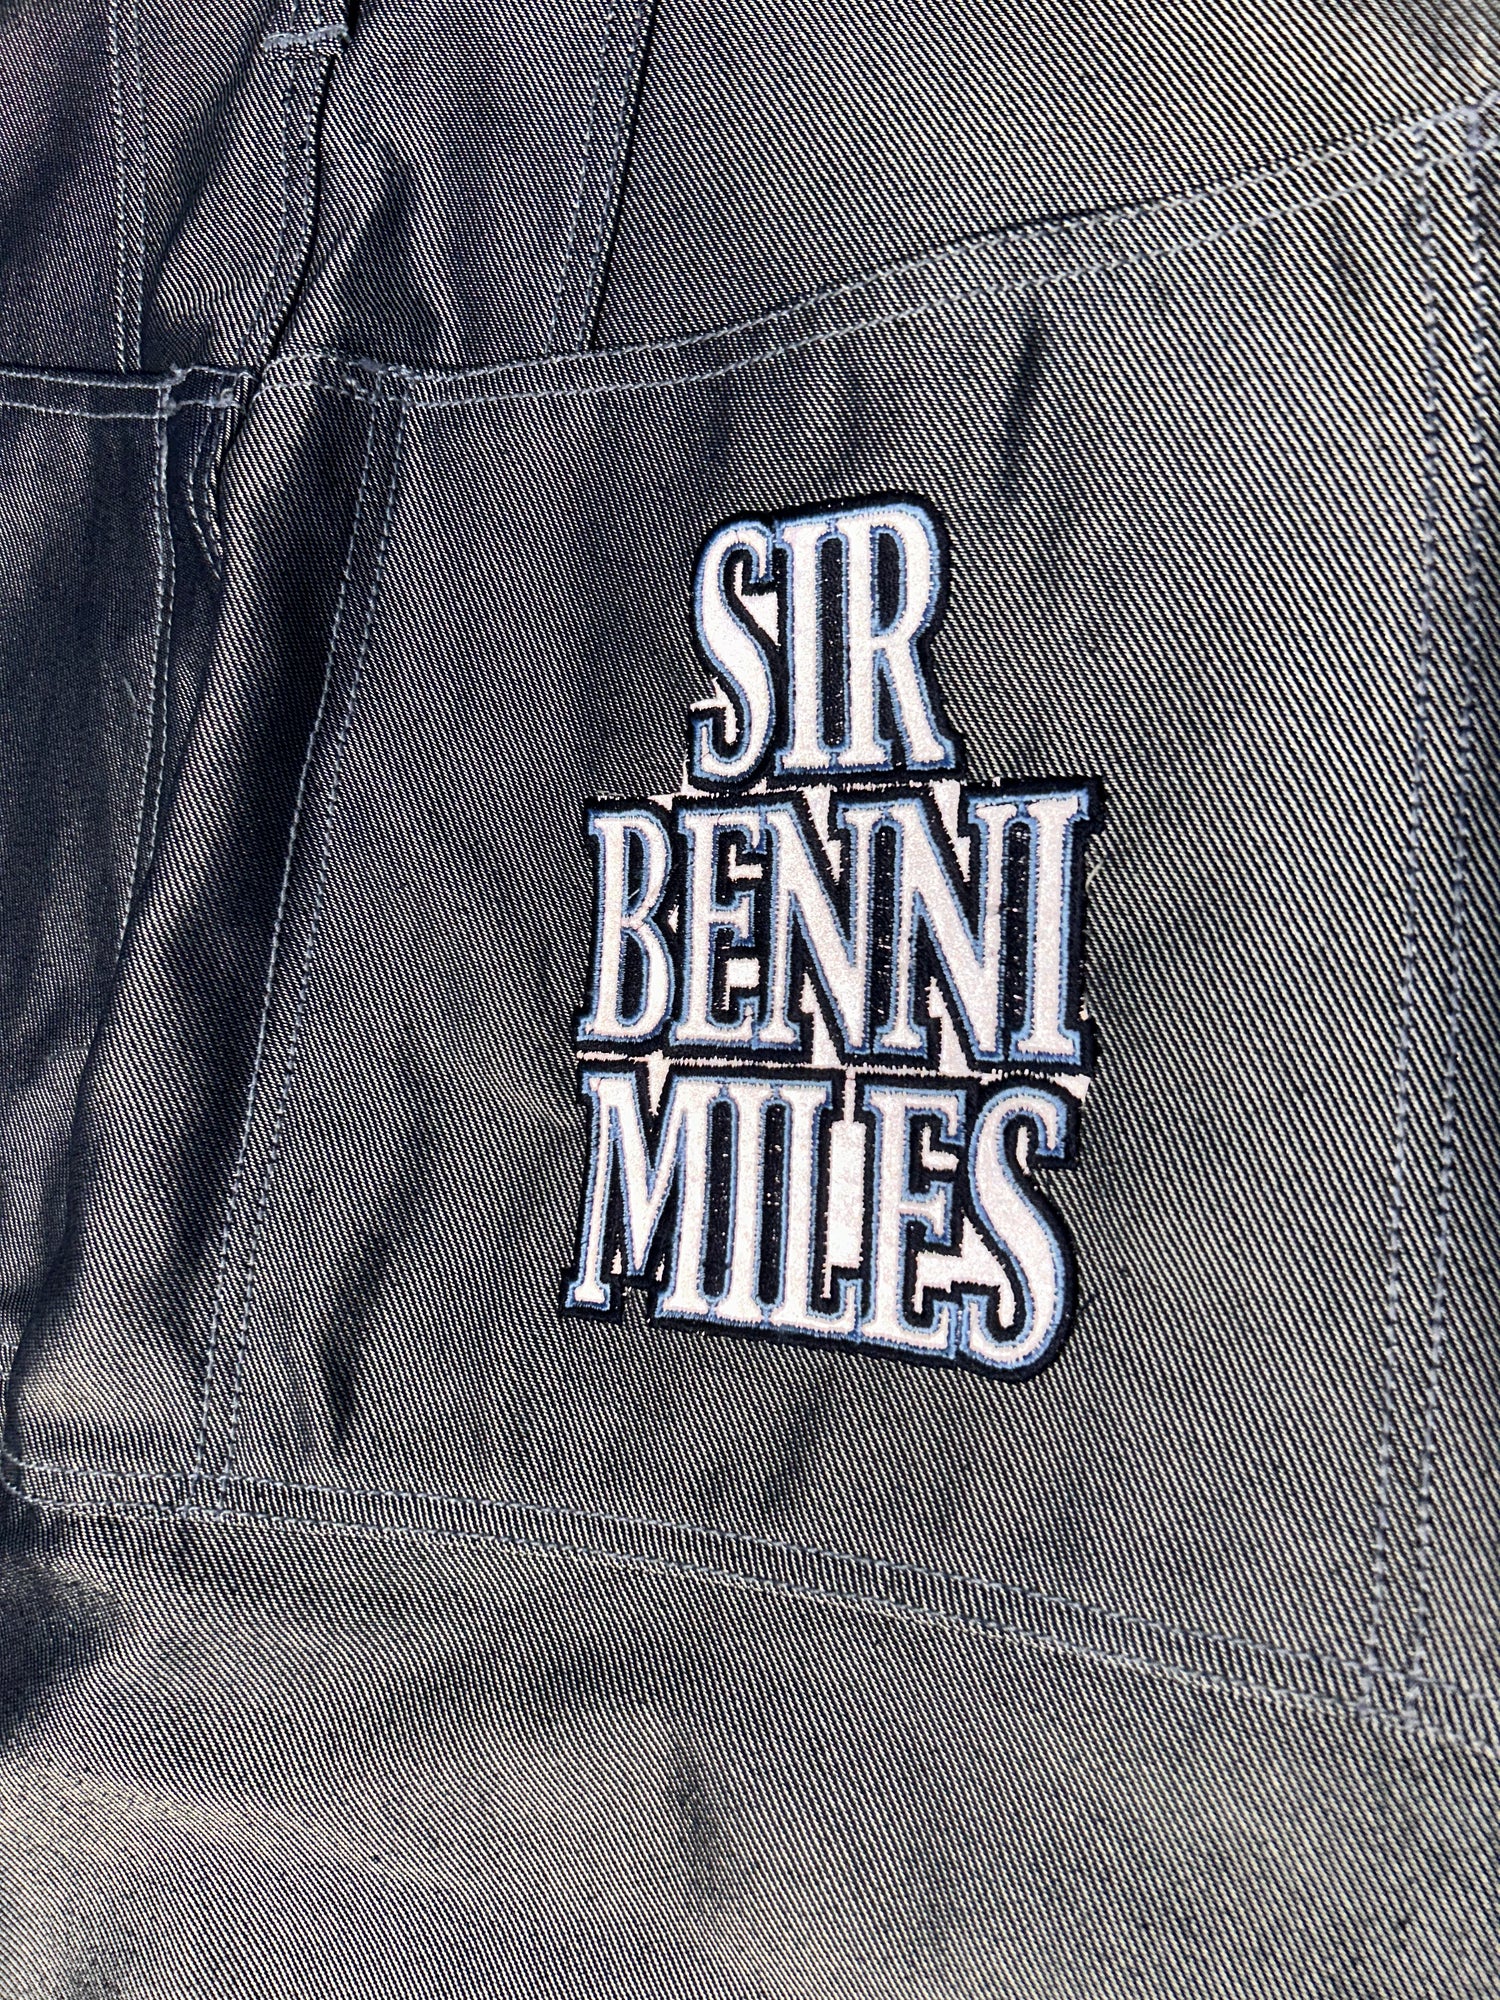 Baggy Jeans Shiny Sir Benni Miles Vintage  (32 USA  M)